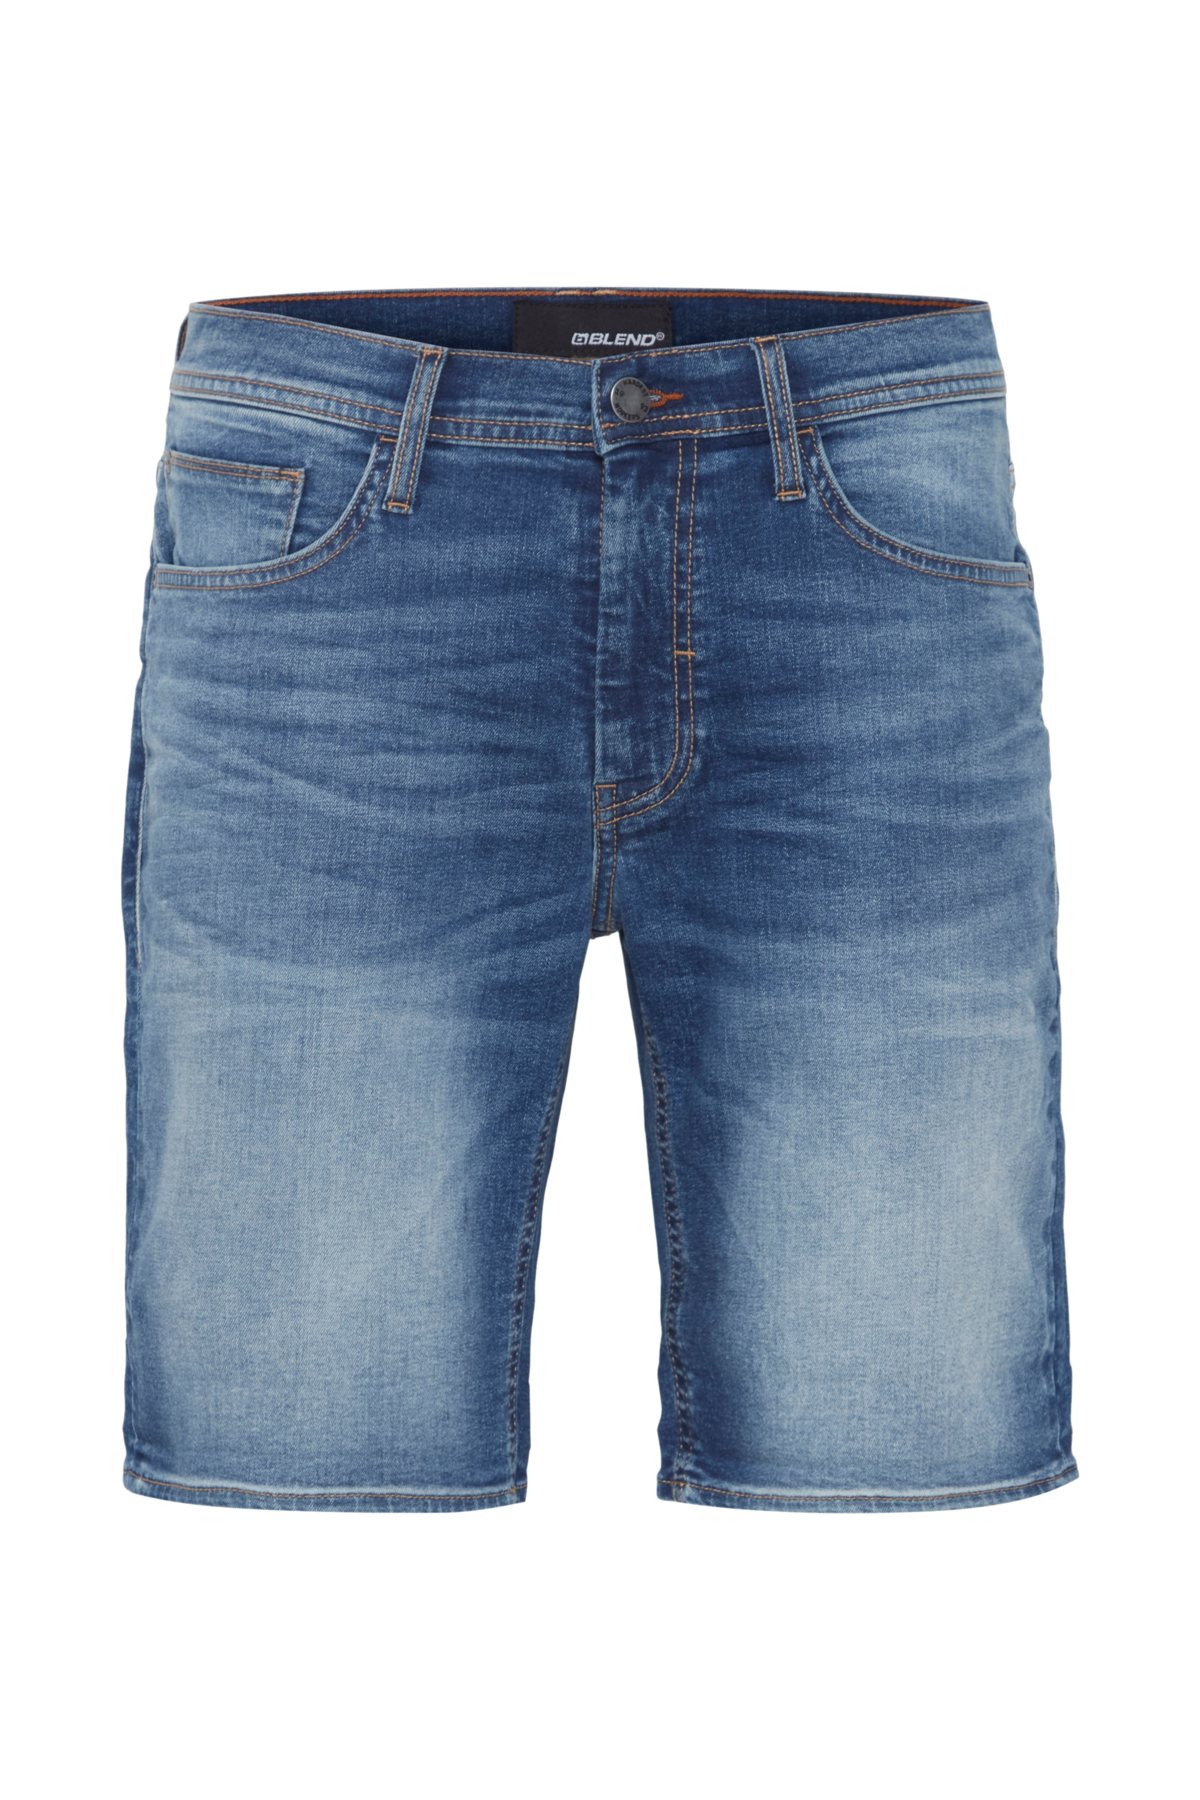 Blend Twister Fit Mid Blue Denim Shorts 20713326